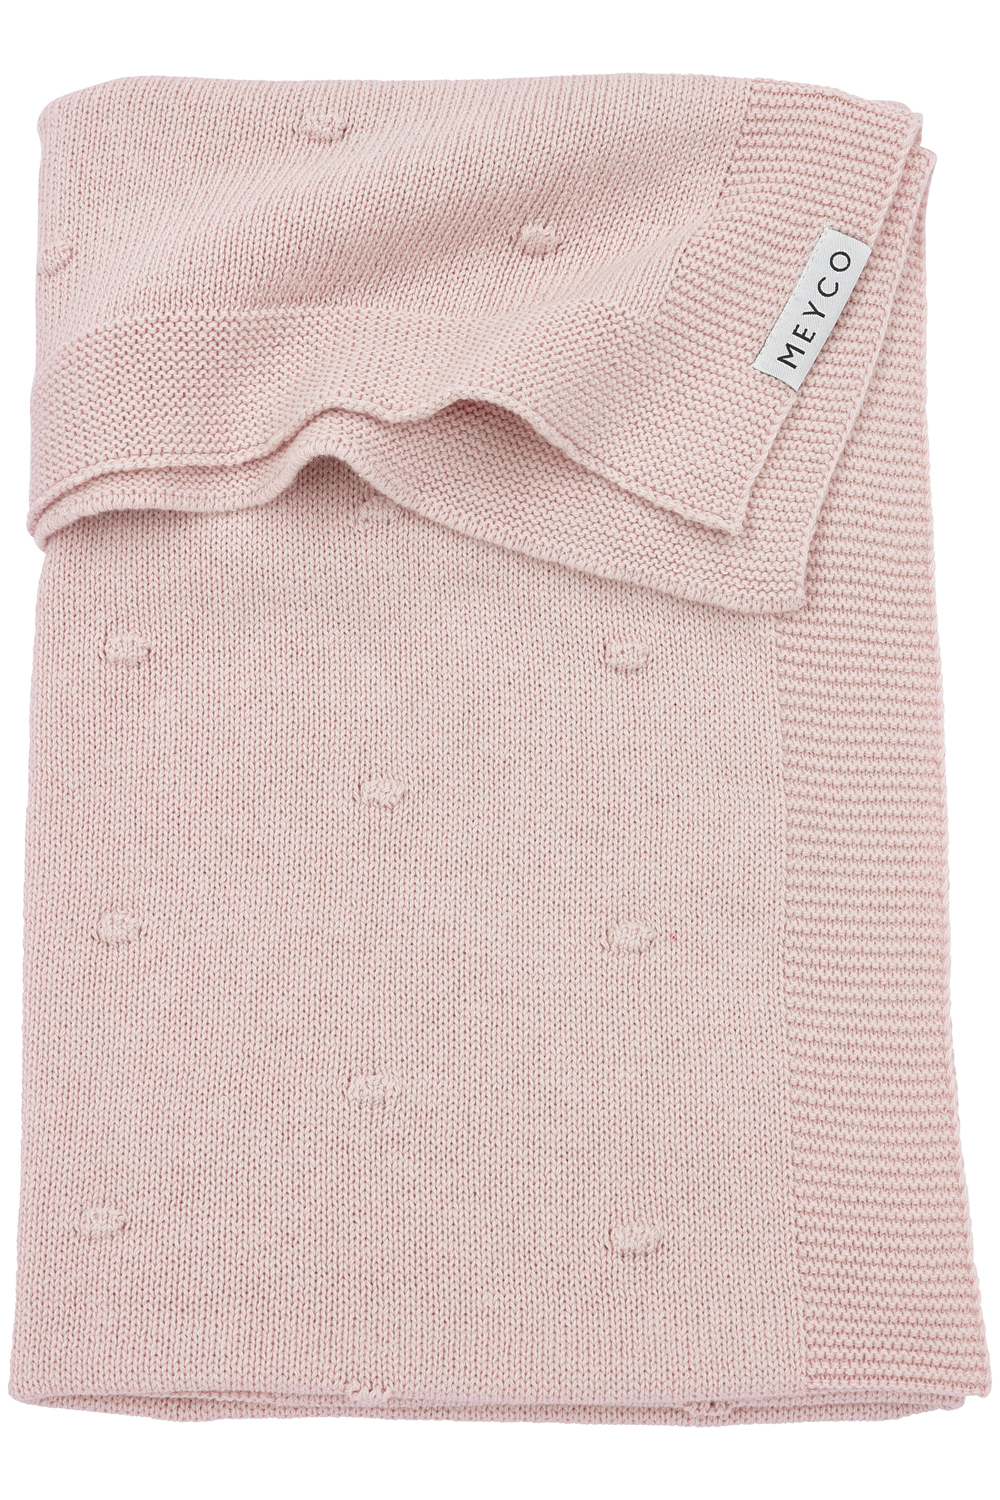 Babydecke klein Mini Knots - Soft Pink - 75x100cm